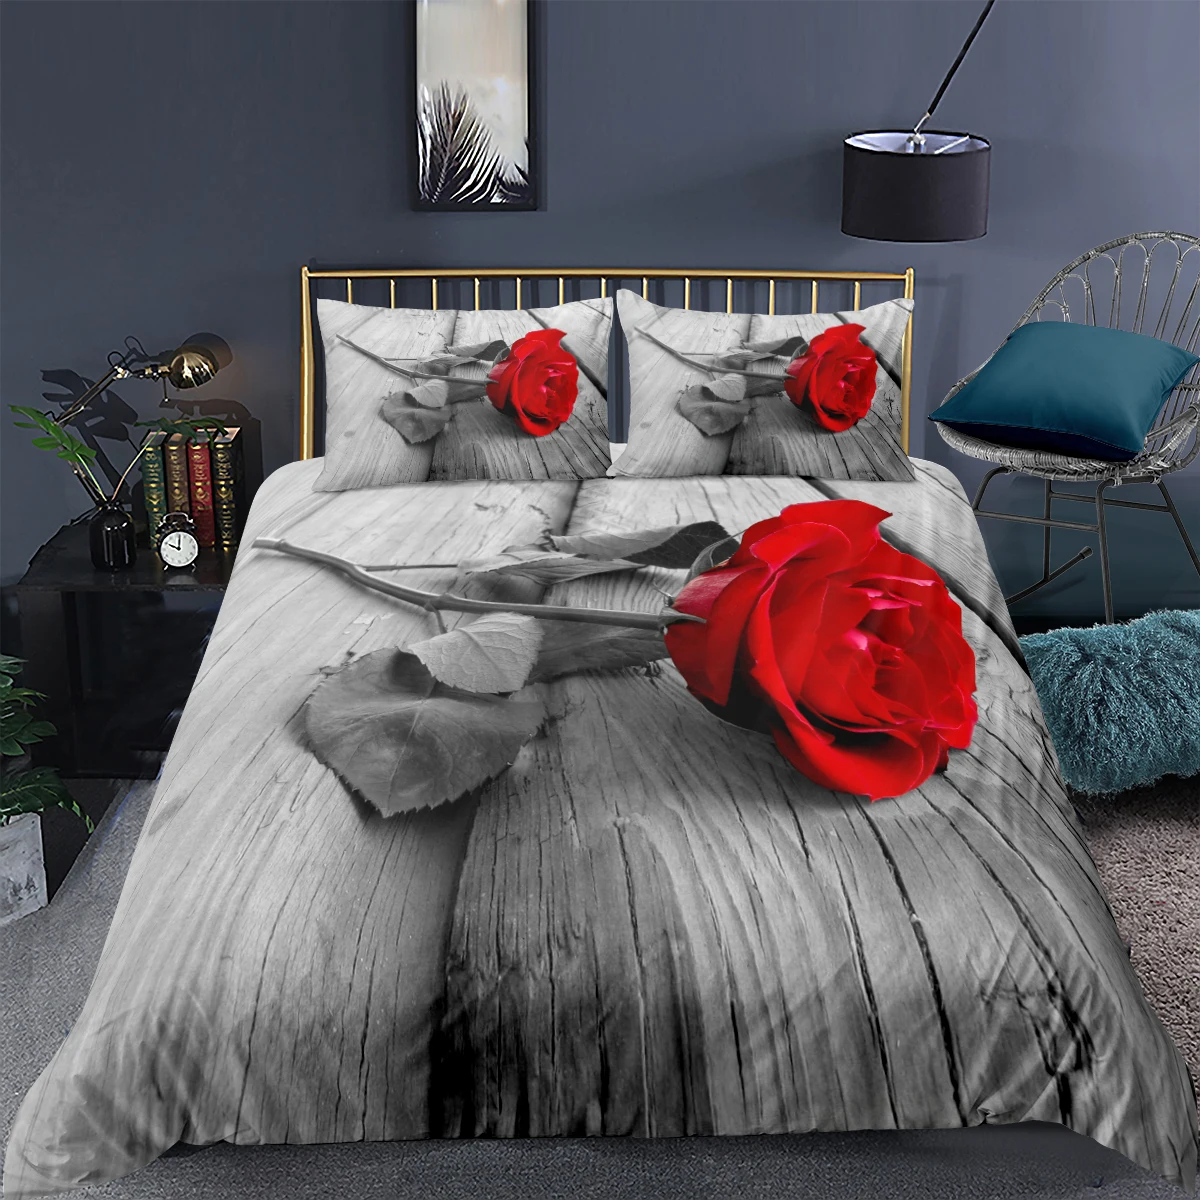 

Anlage Bettwäsche Set 3D Rose Blume Gedruckt Bettbezug Kissenbezug Einzigen Doppel Königin Twin Voll König Größe 2/3 Pcs Quilt a